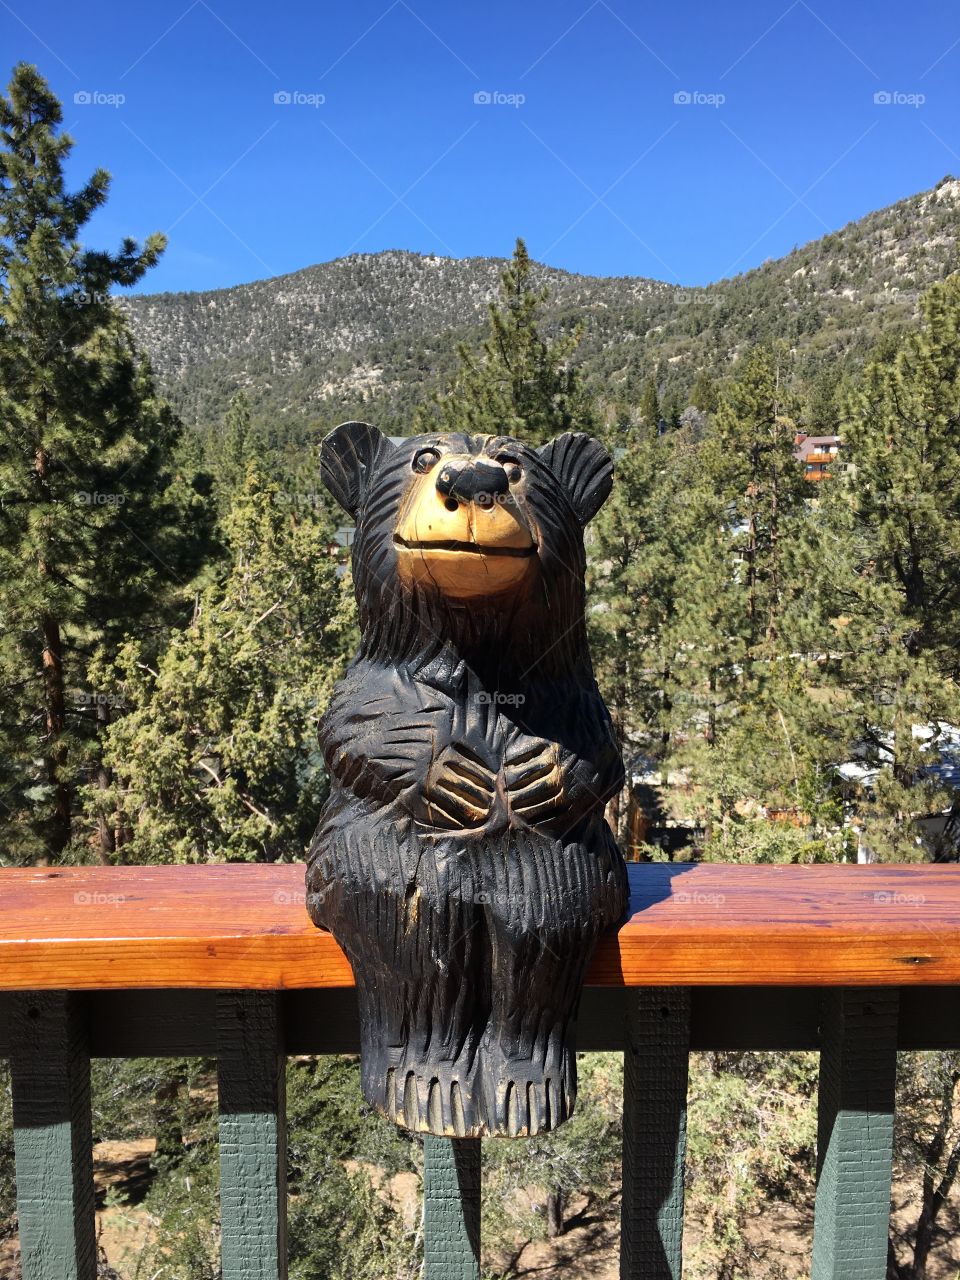 Small bear in Big Bear!